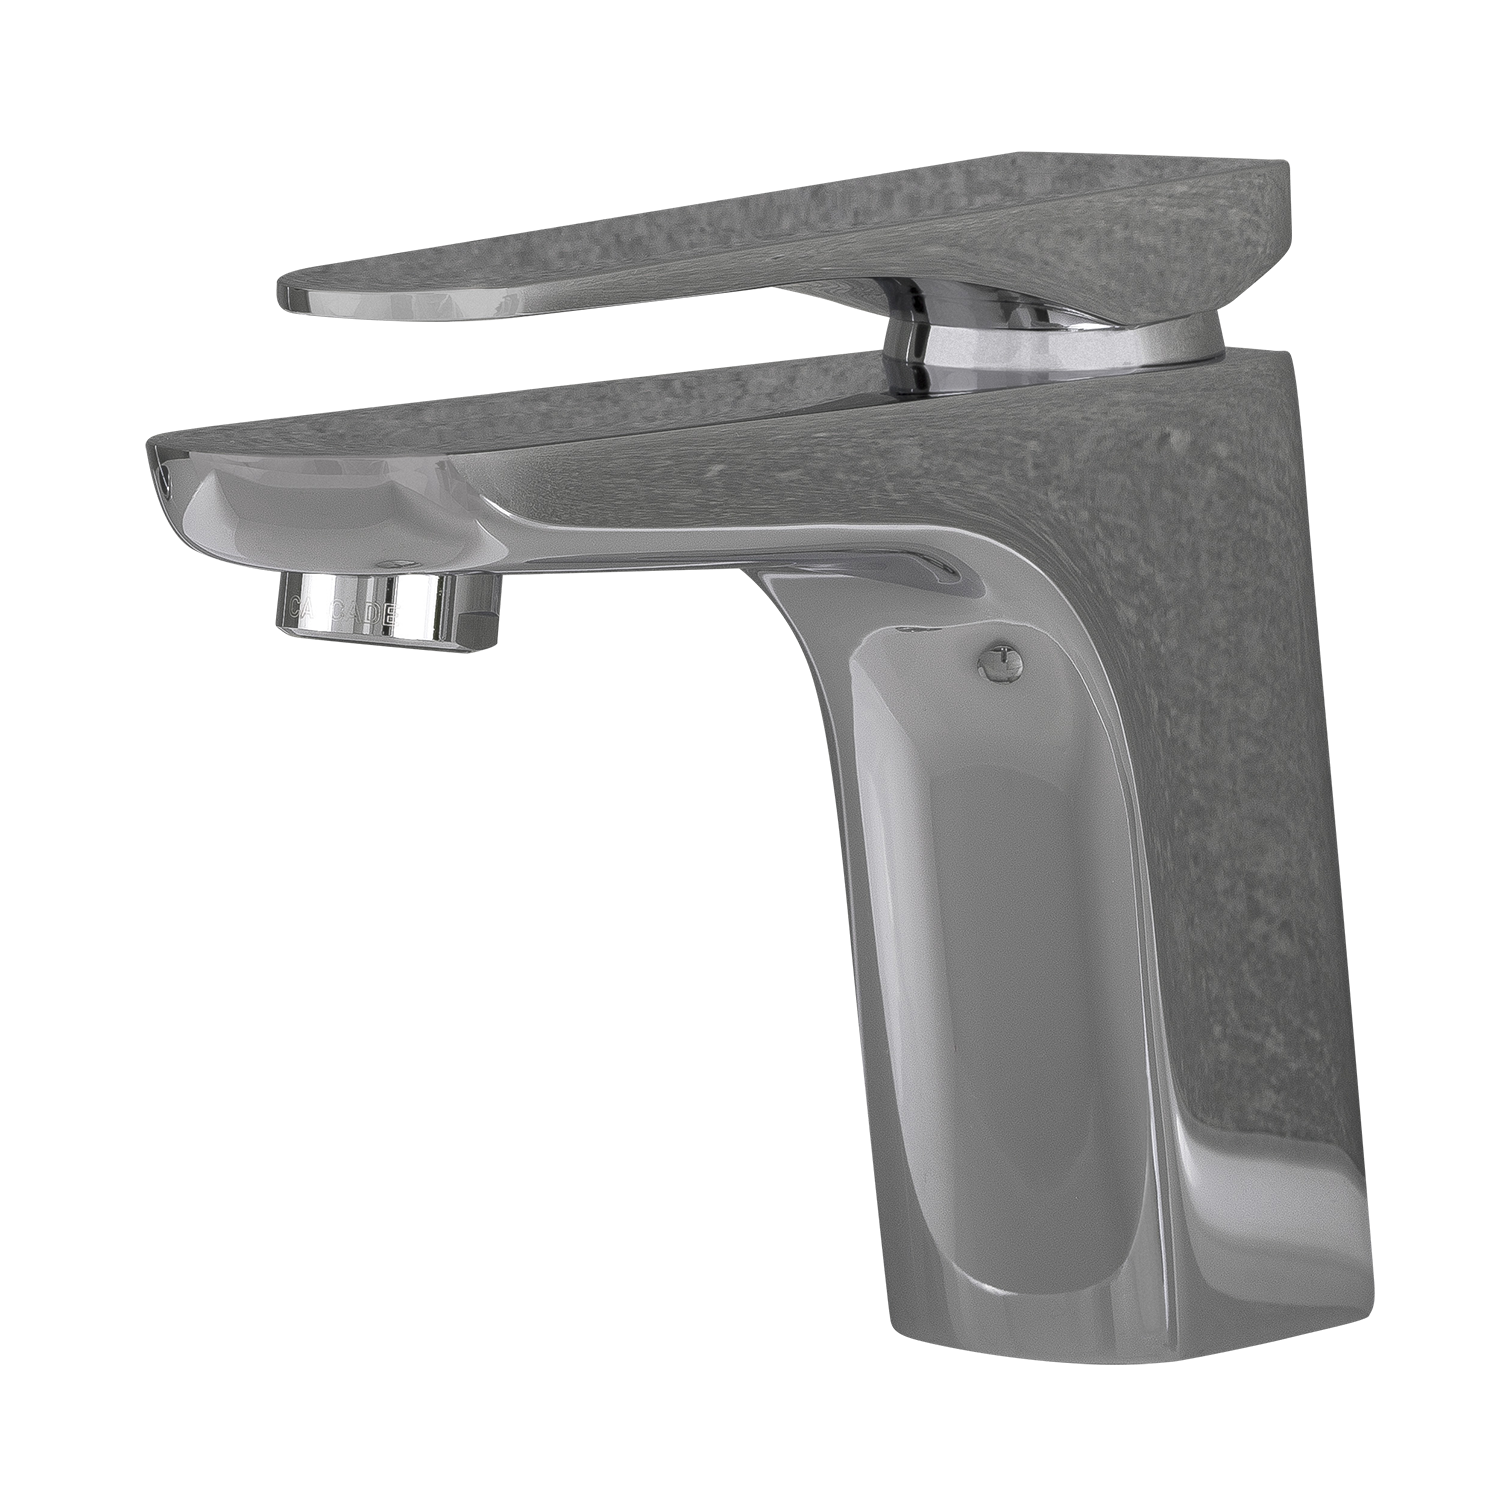 DAX Single Handle Bathroom Faucet, Brass Body, Chrome Finish, 6-7/8 x 5-5/16 Inches (DAX-805A-CR)